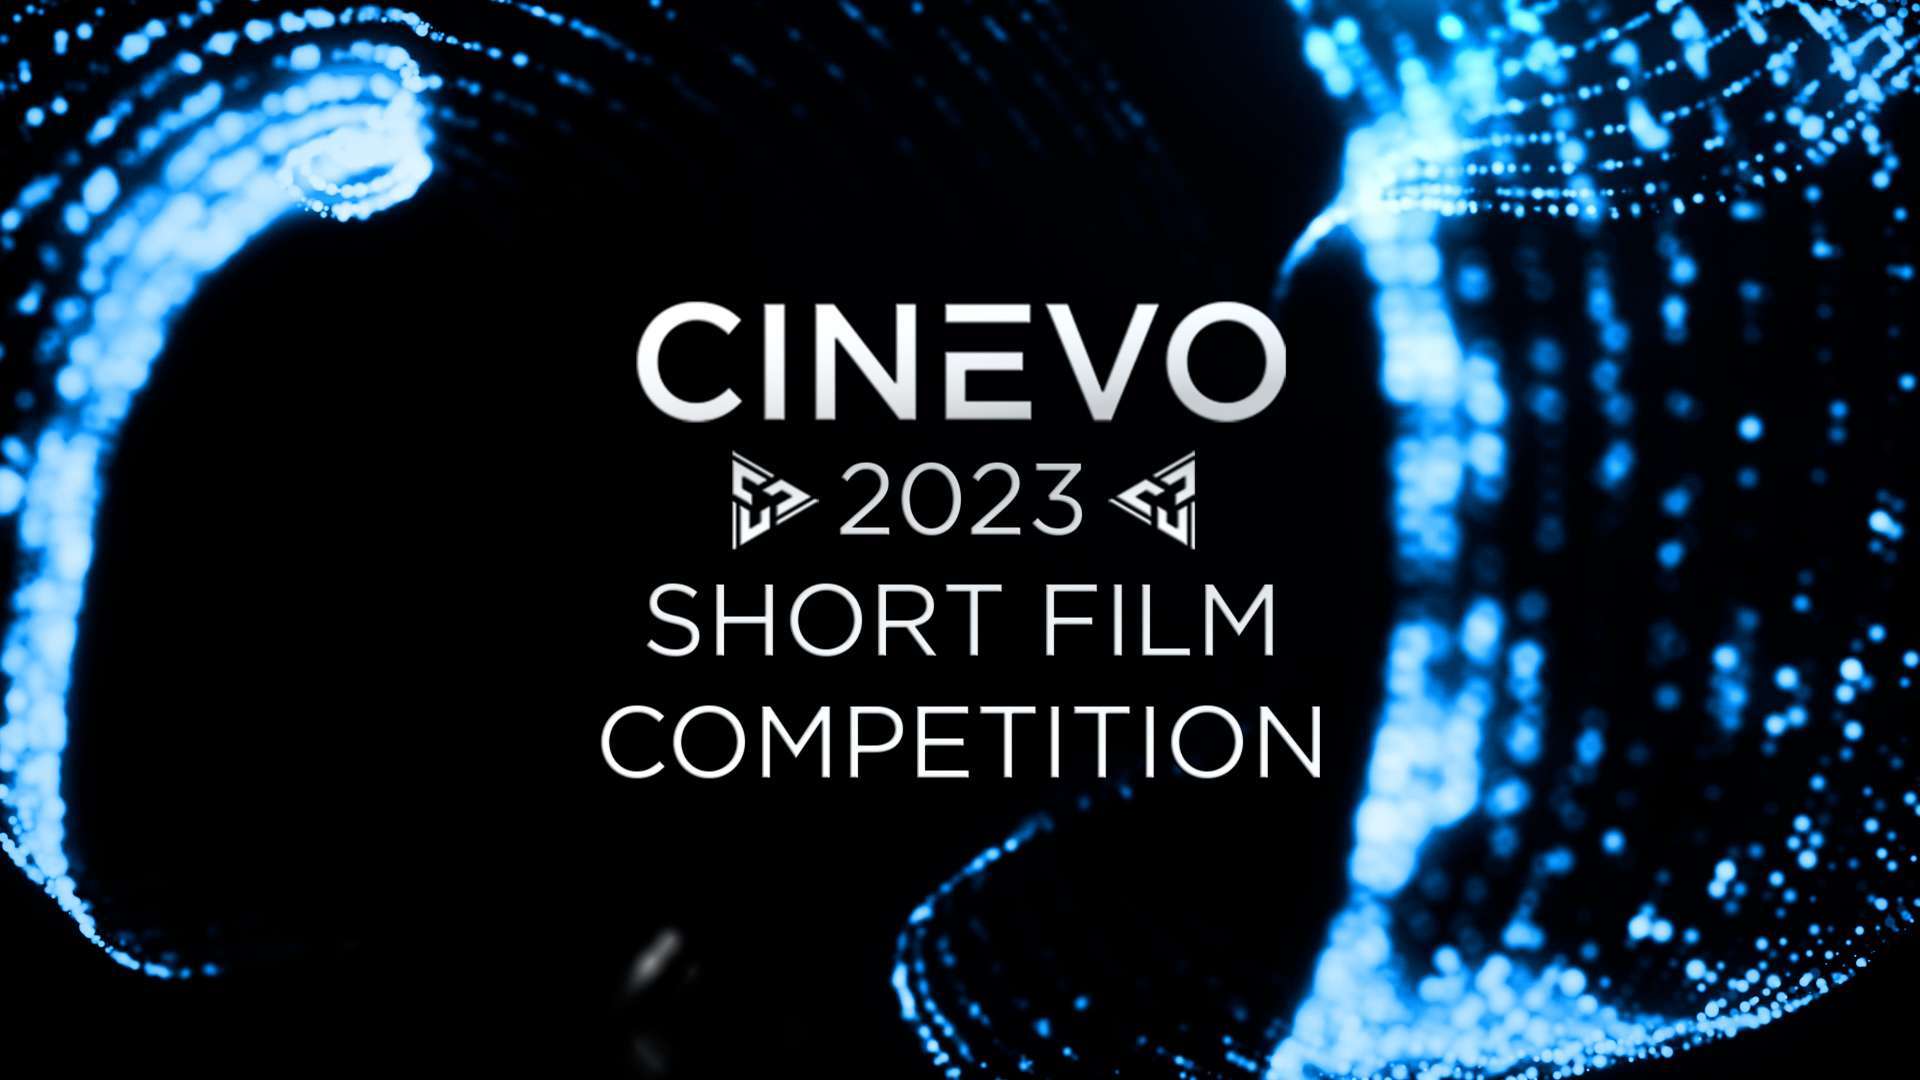 Cinevo 2023 Short Film Contest